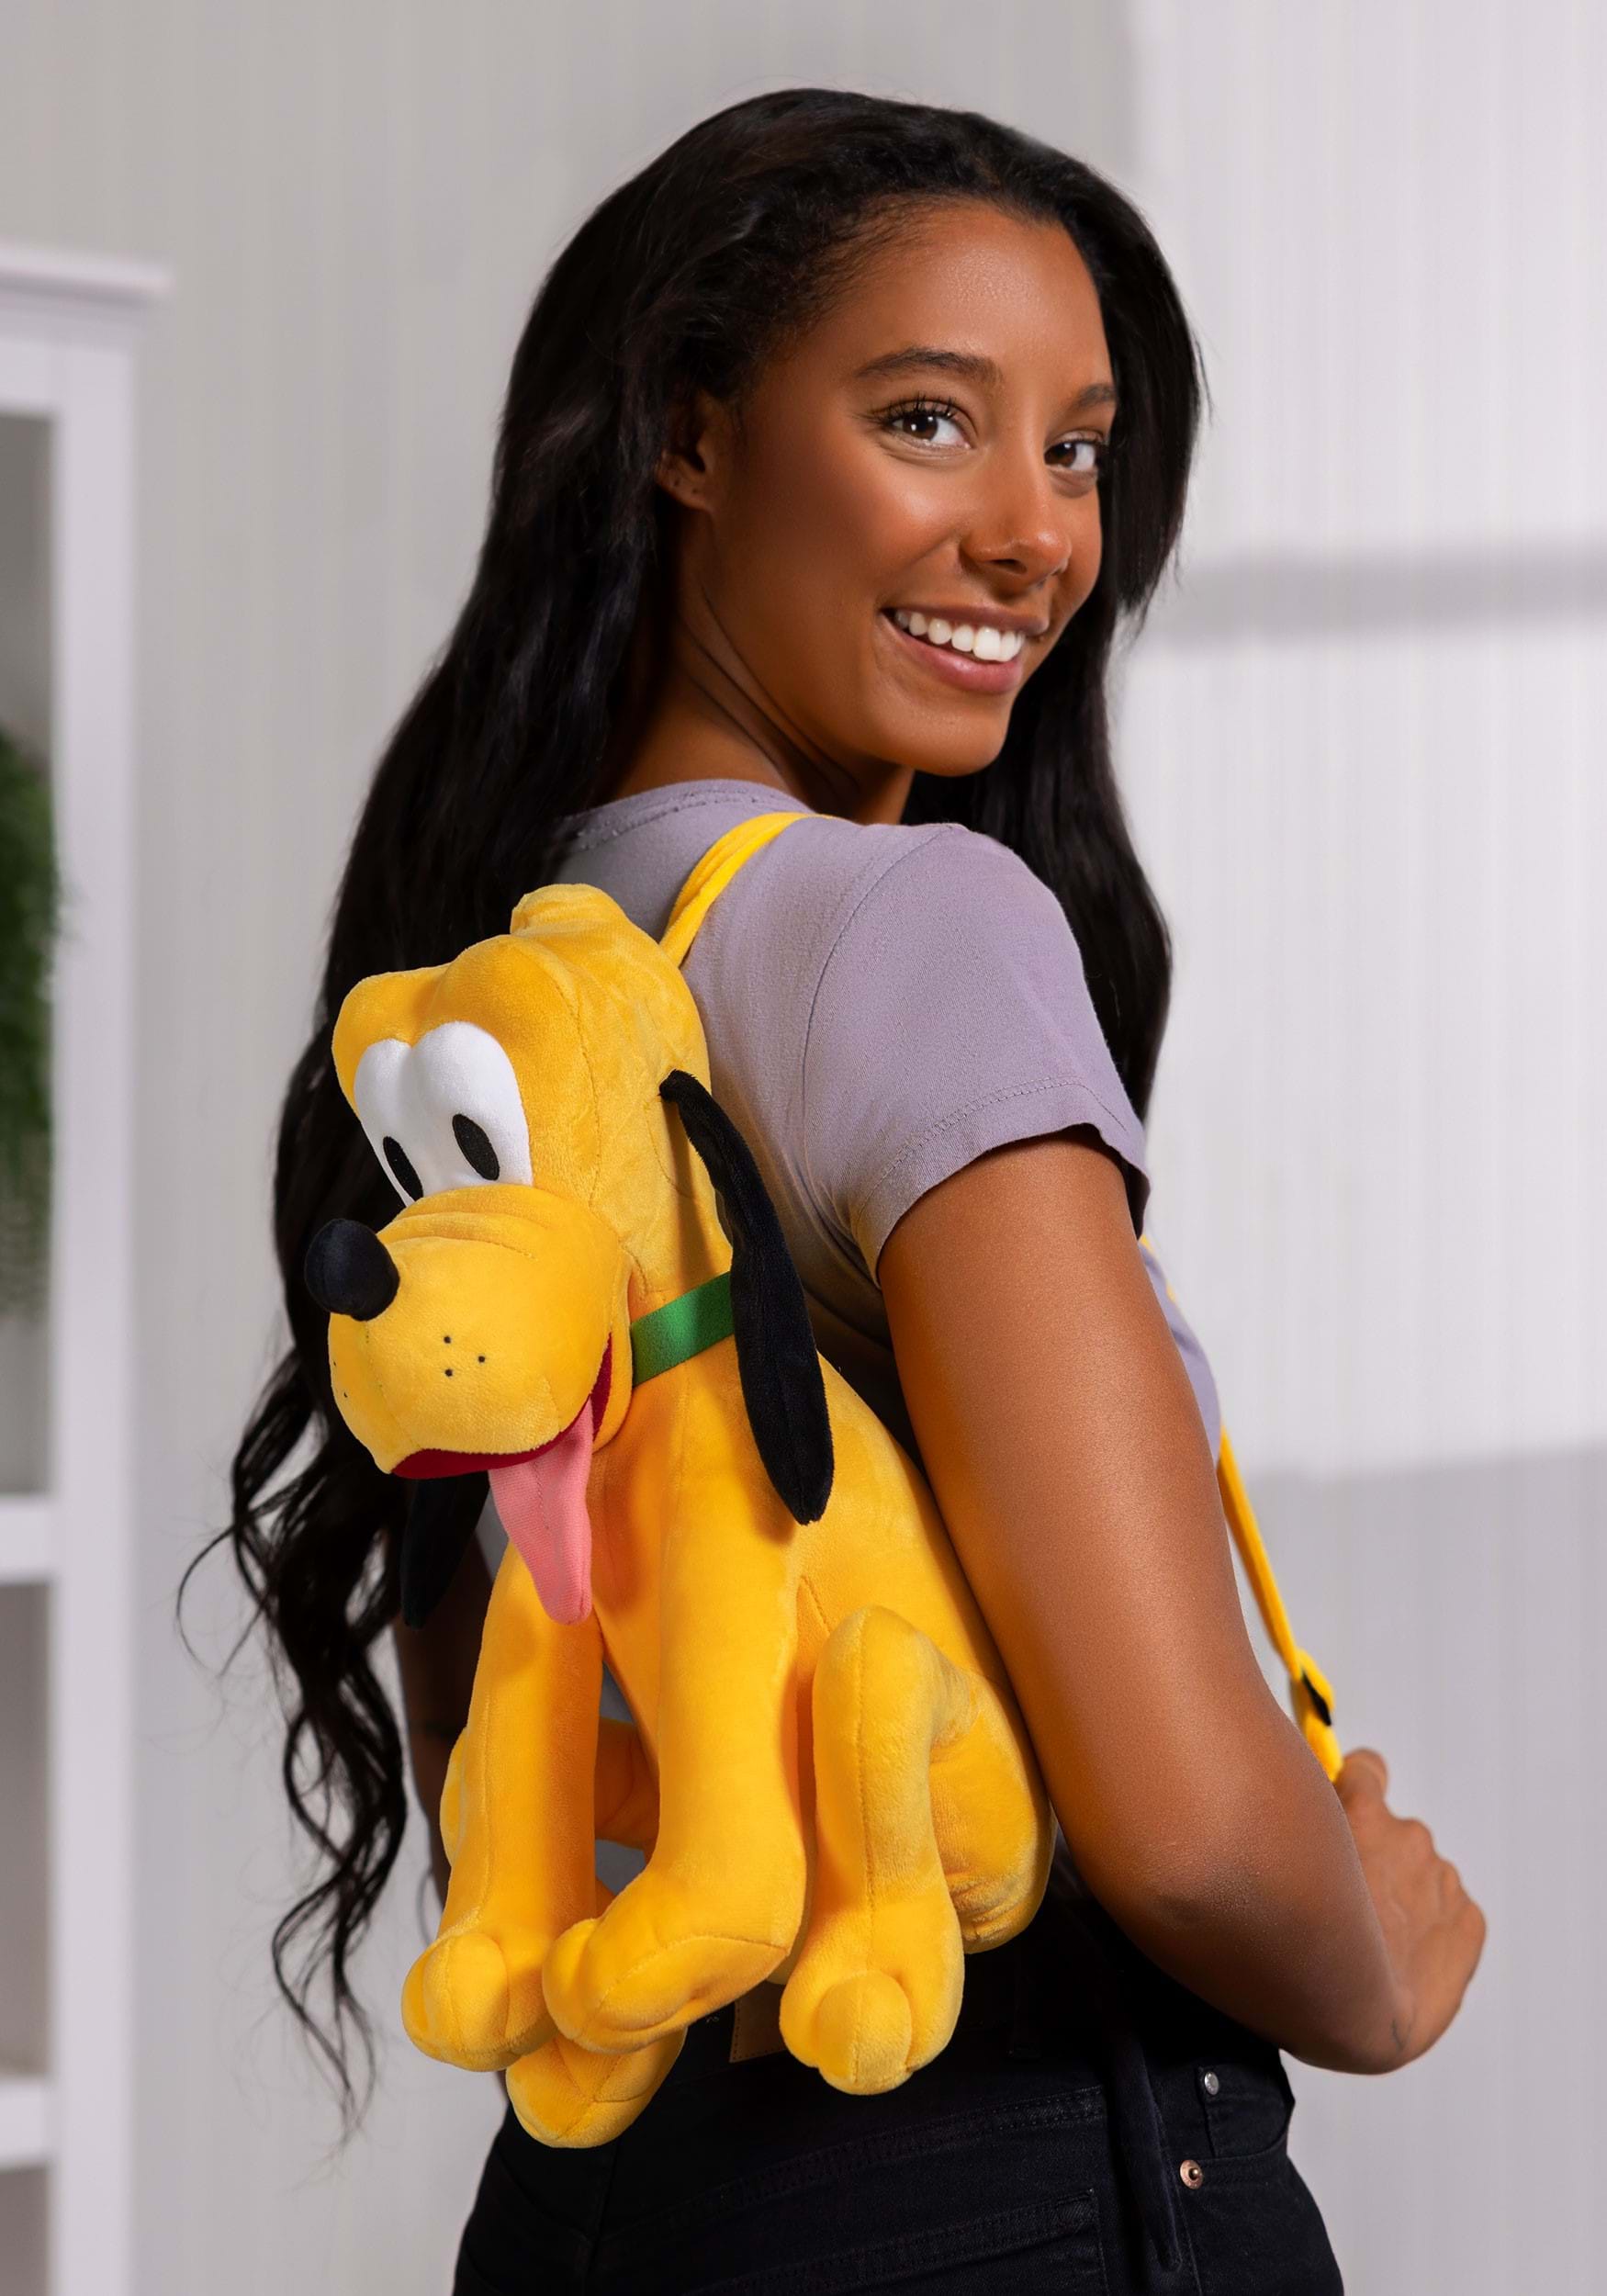 Disney Pluto Costume Companion